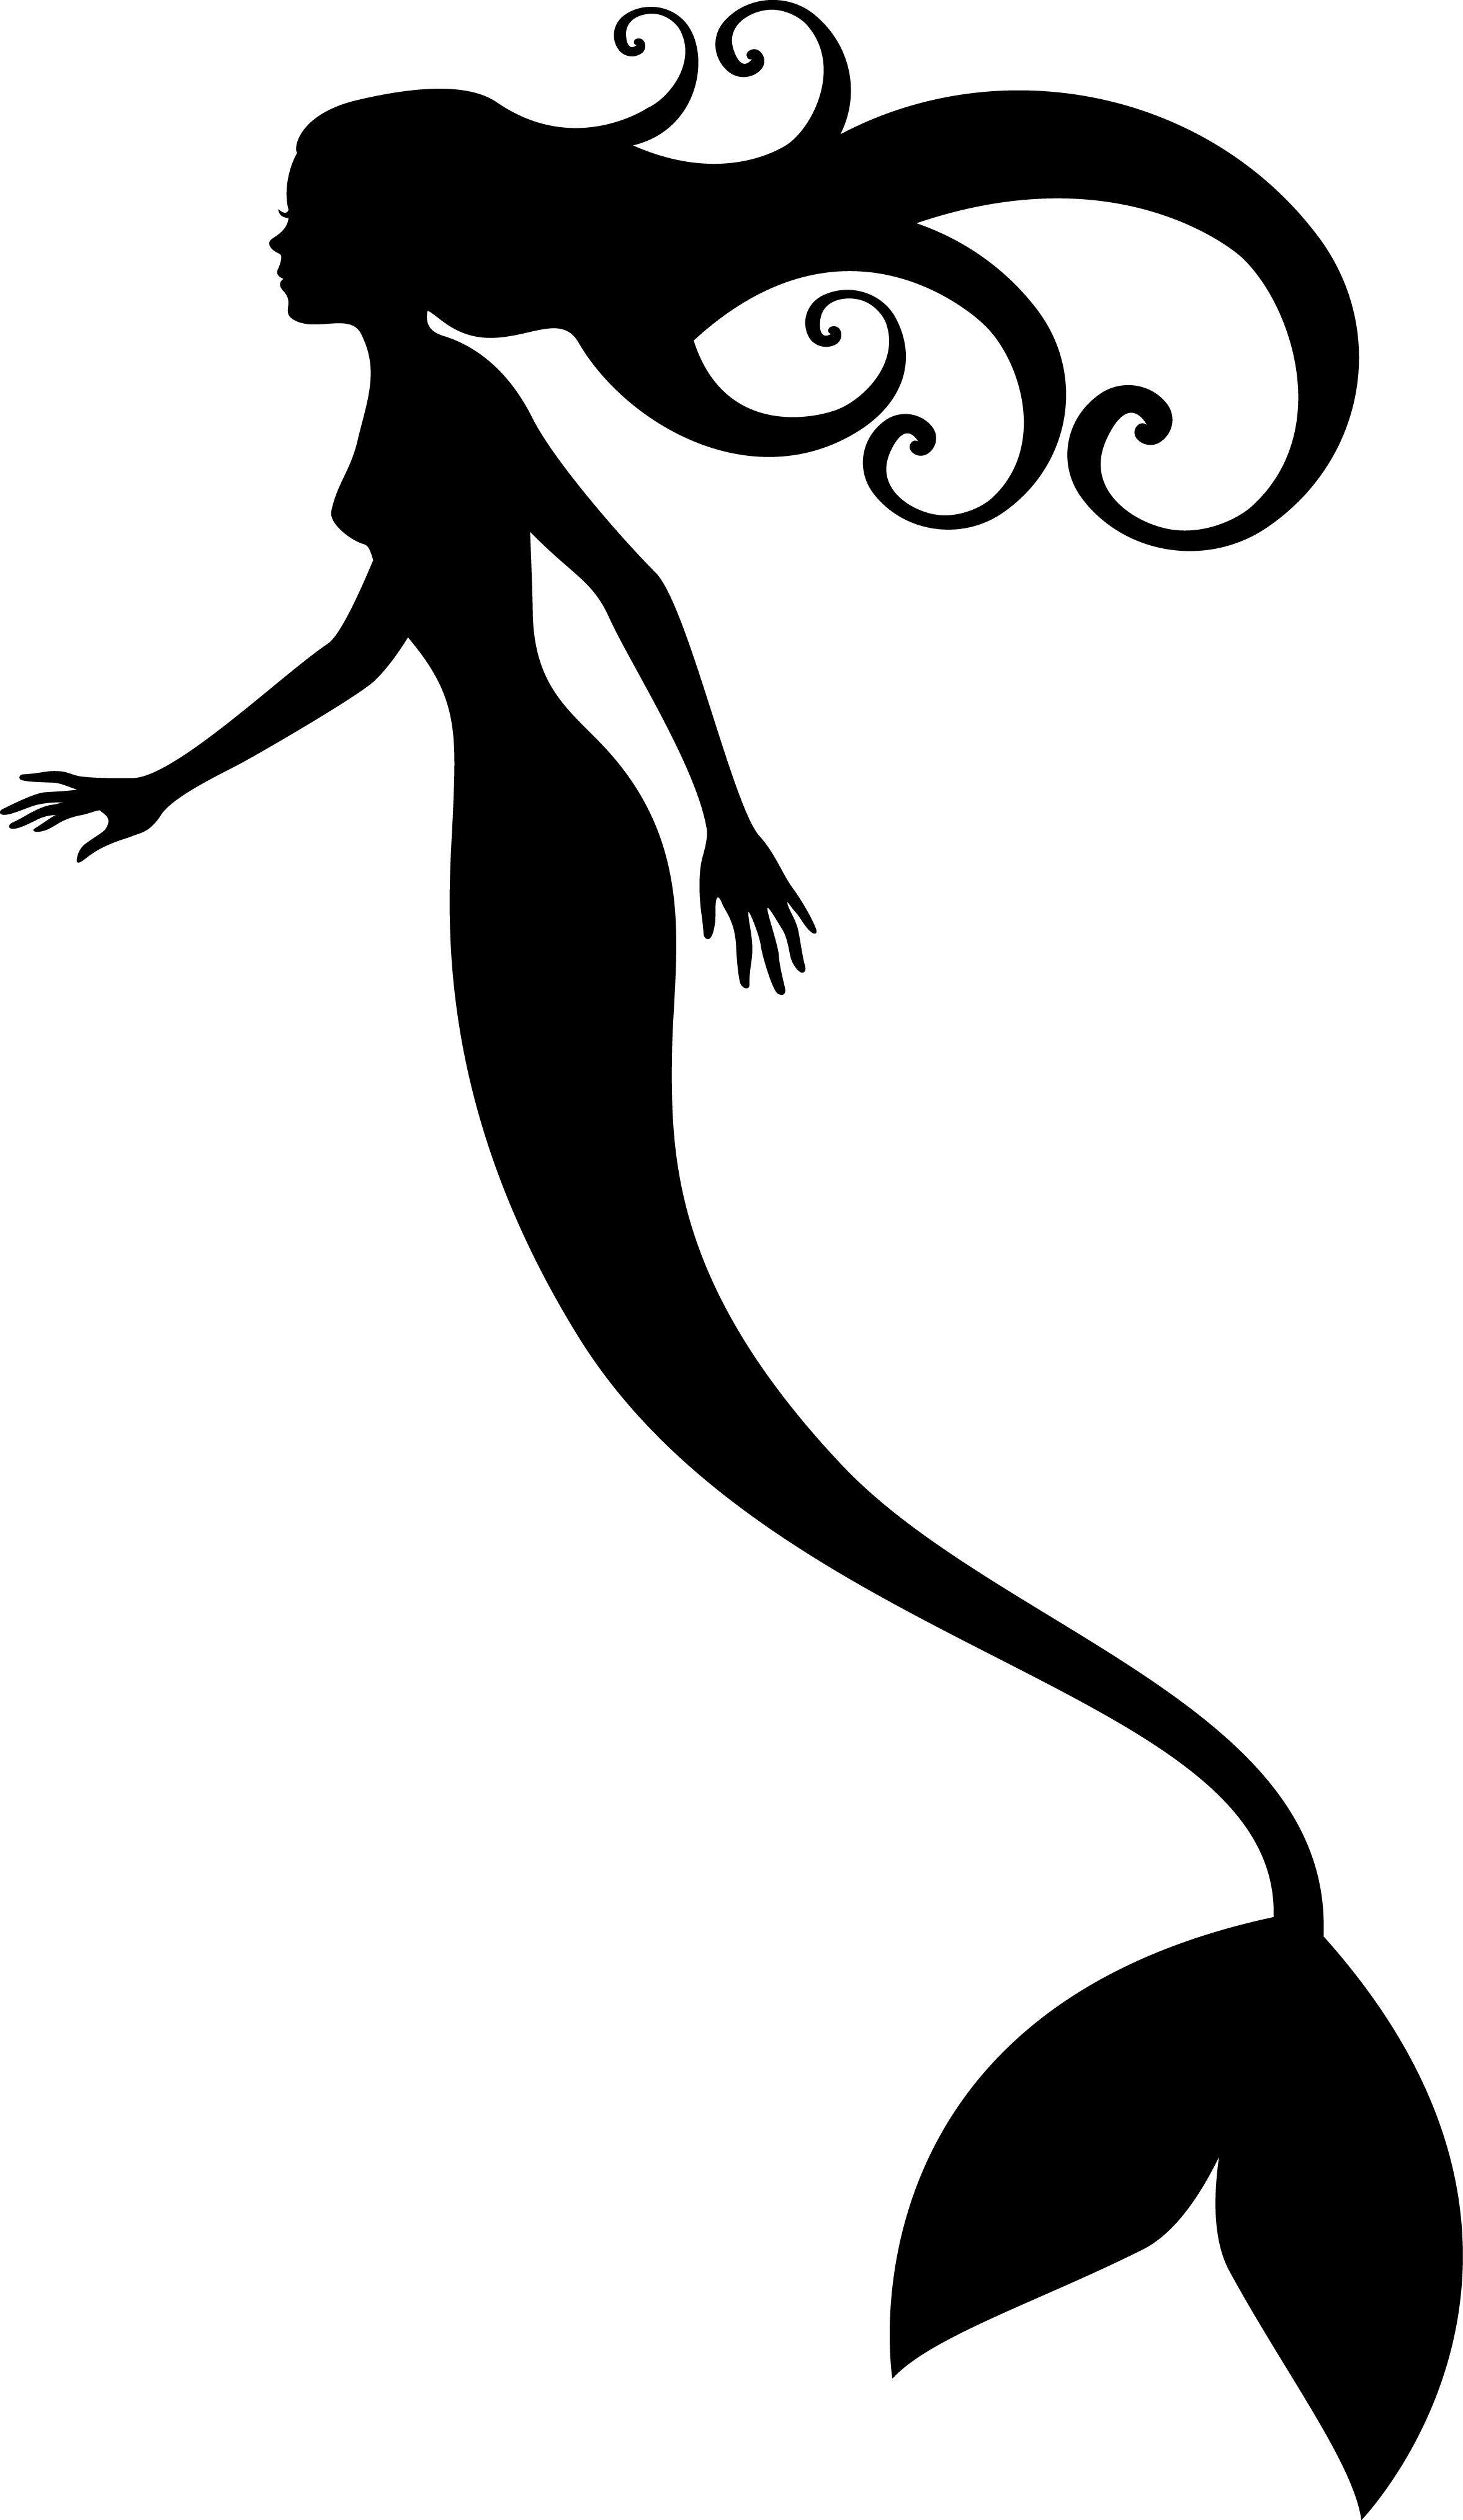 Black and Wight Mermaid Logo - Black+And+White+Mermaid+Clip+Art | MermaidHiRes | Stencil designs ...